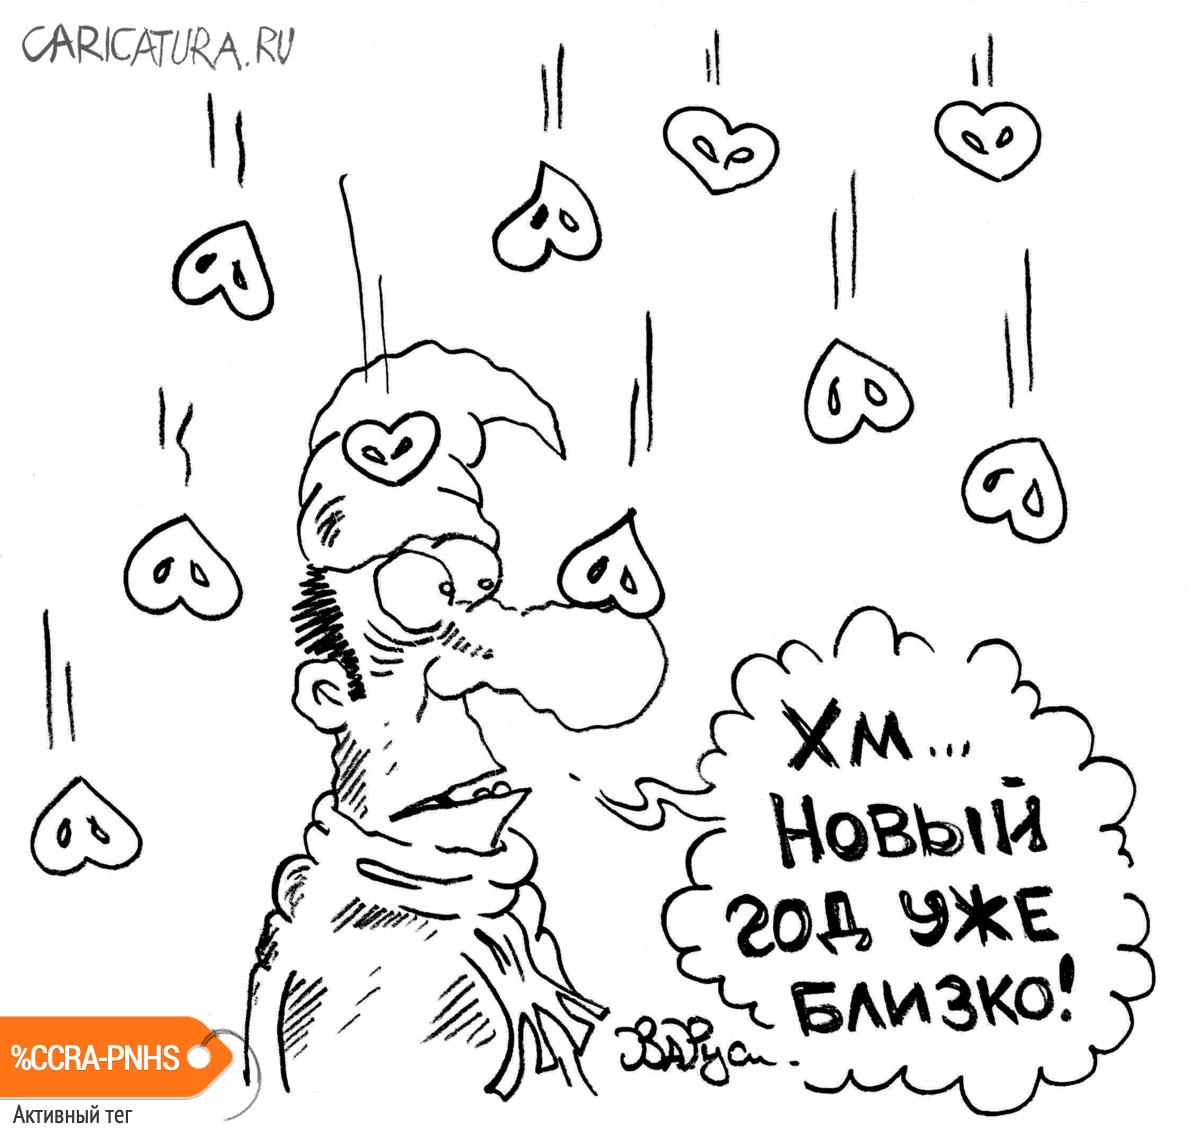 Карикатура "Свиные пятачки", Руслан Валитов